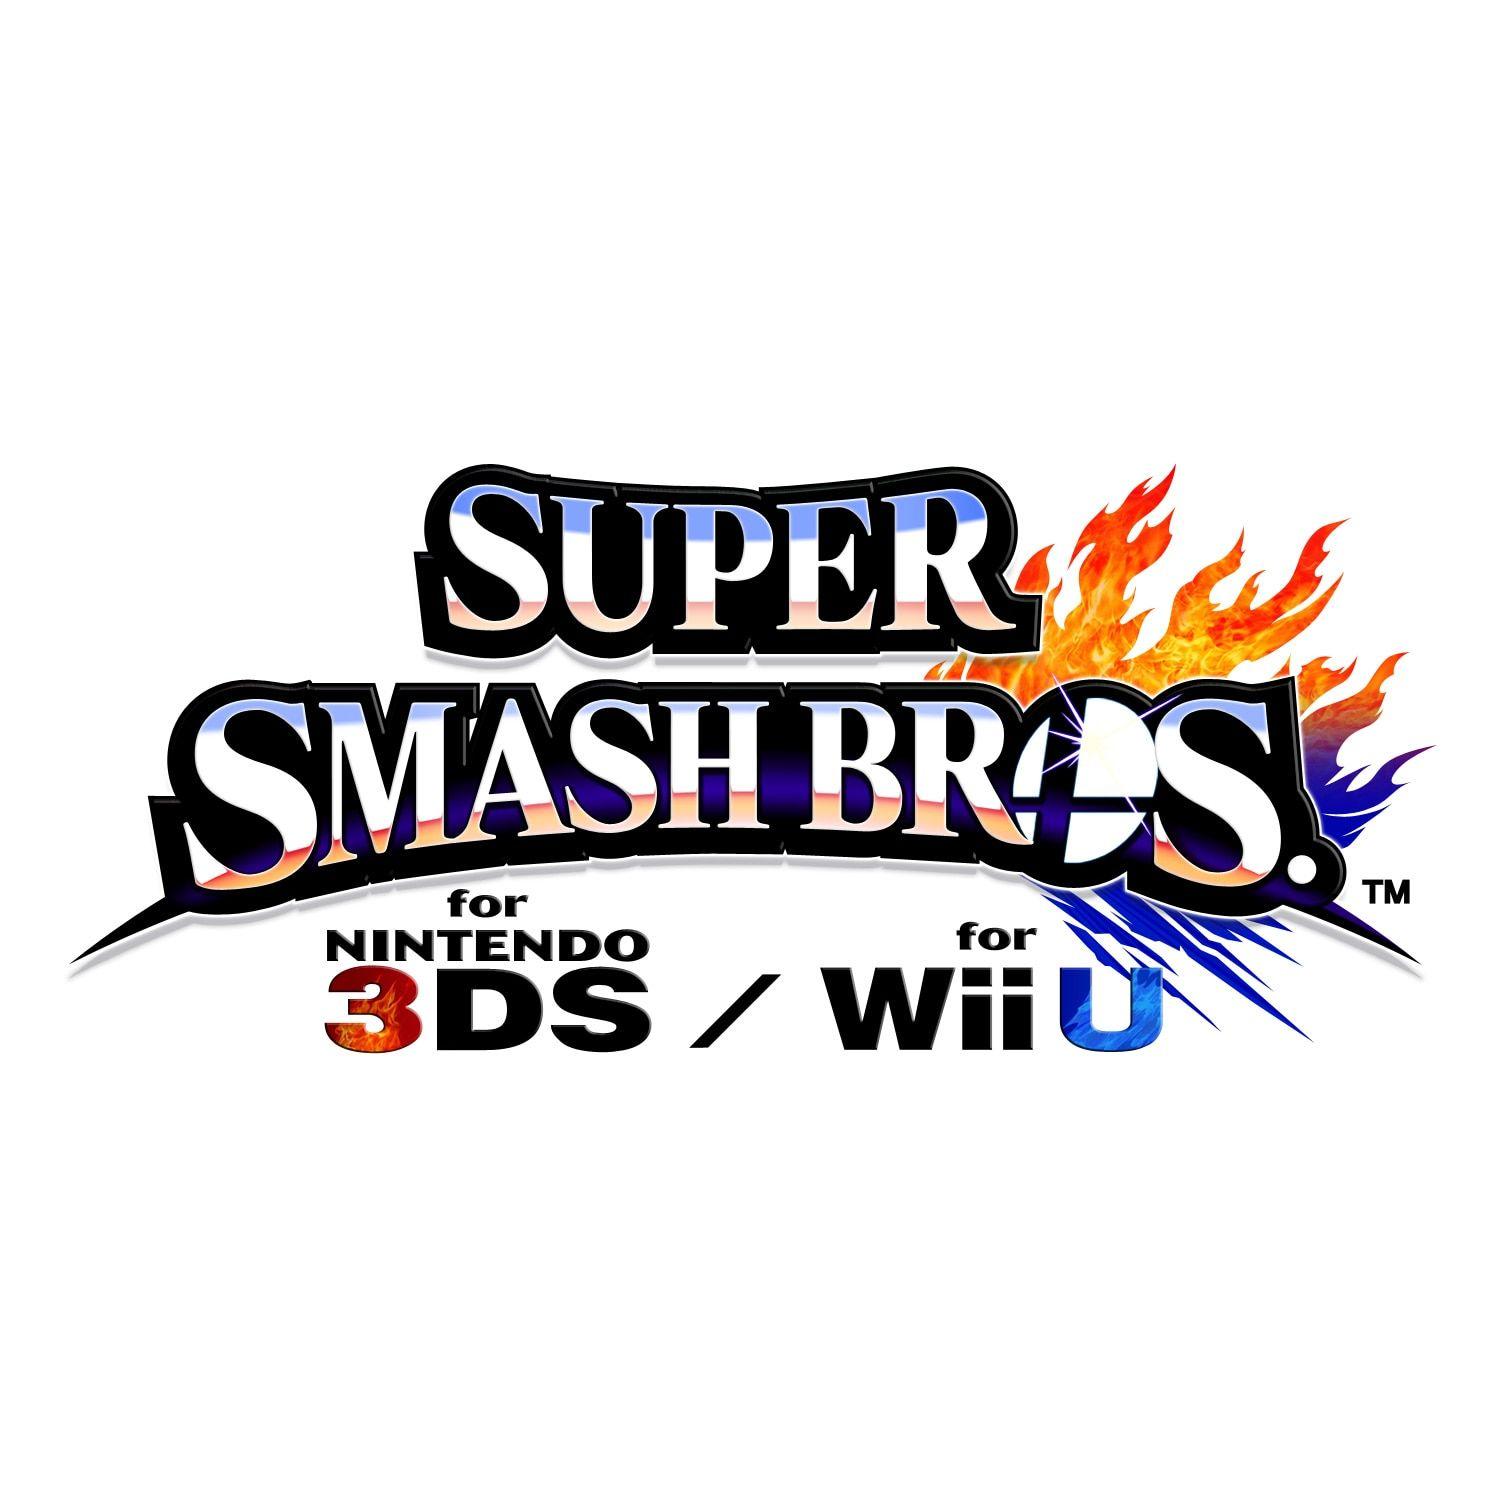 Super Brother Logo - Official Site - Super Smash Bros. for Nintendo 3DS / Wii U